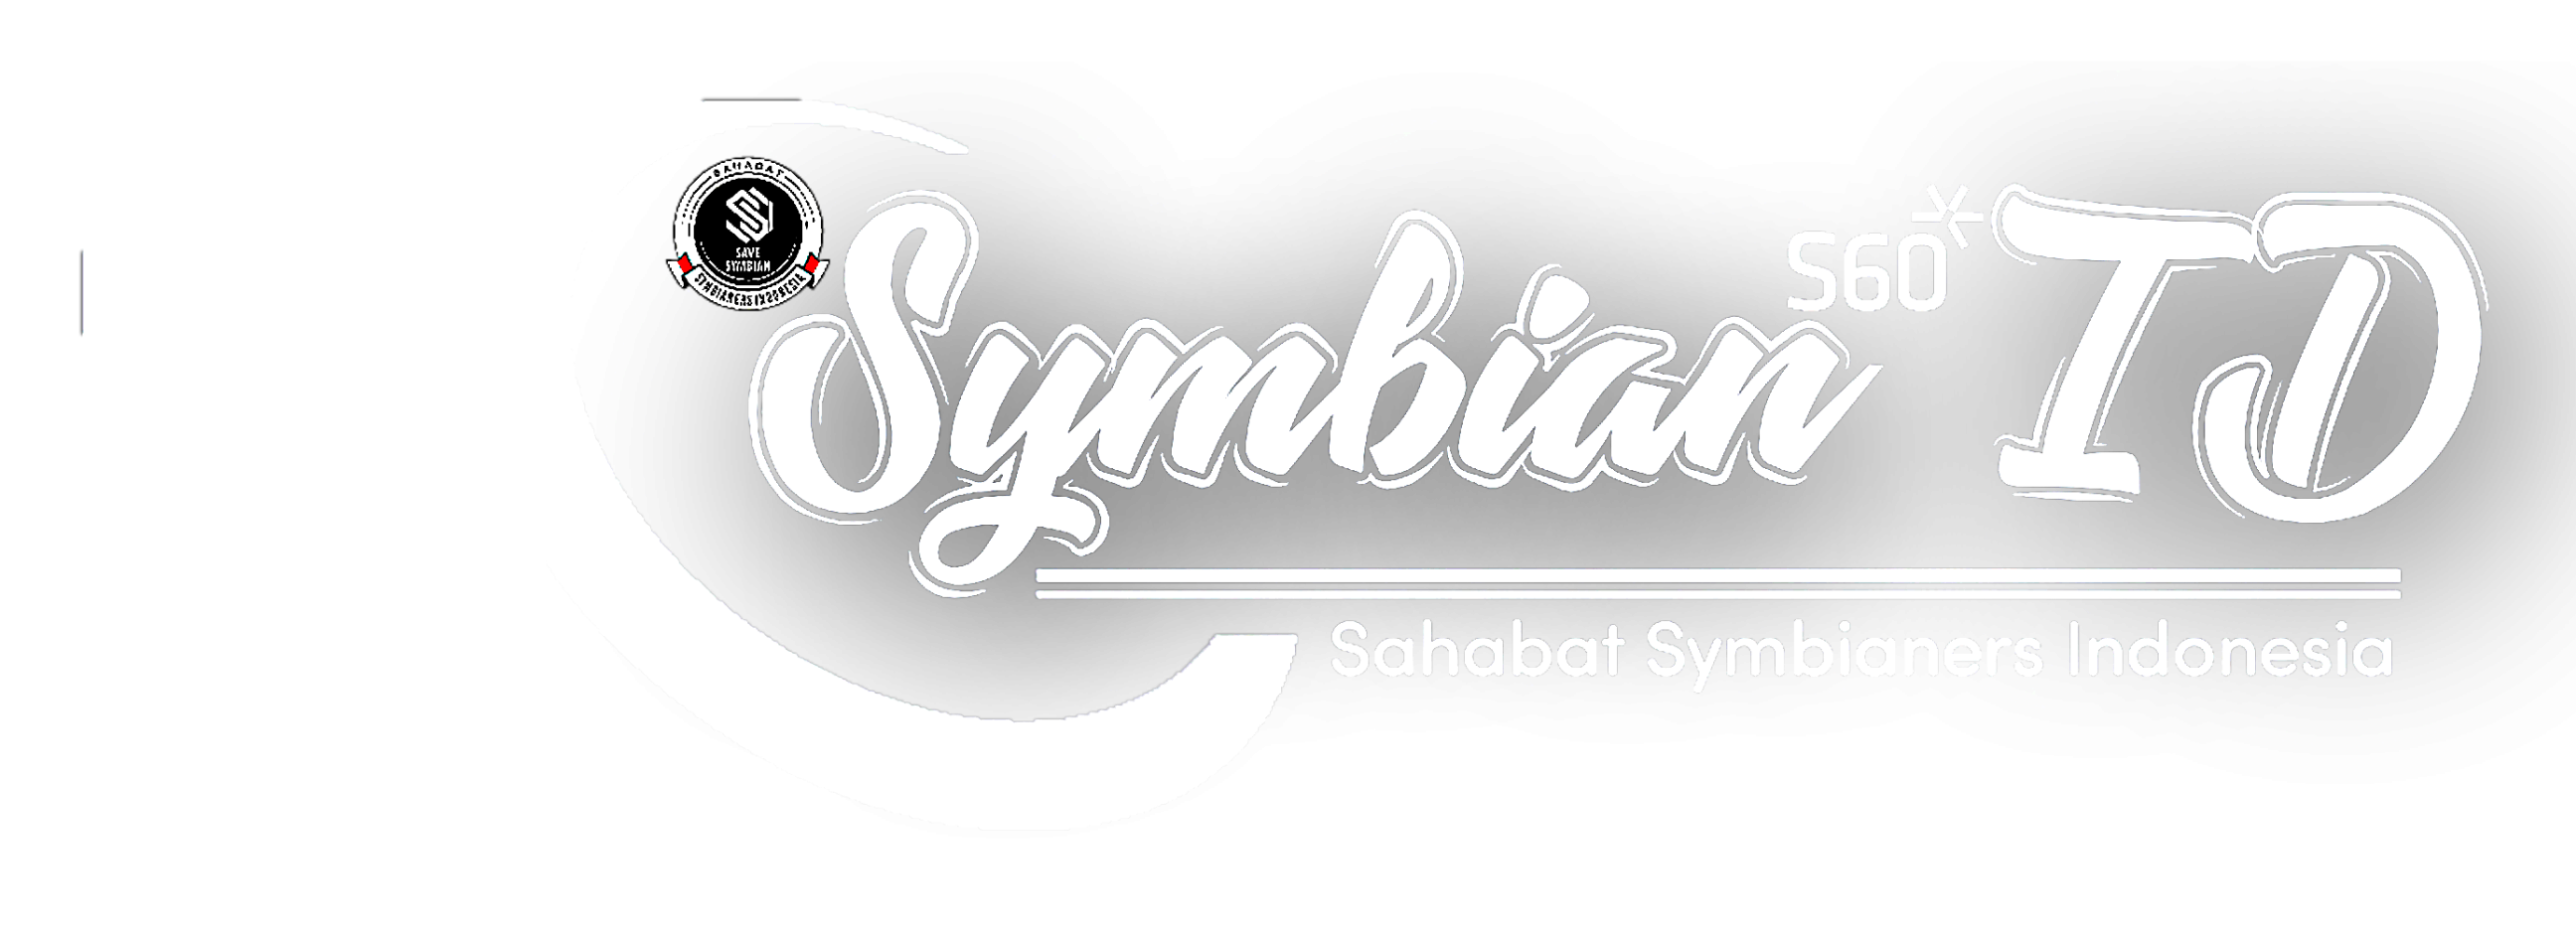 Sahabat Symbianers Indonesia